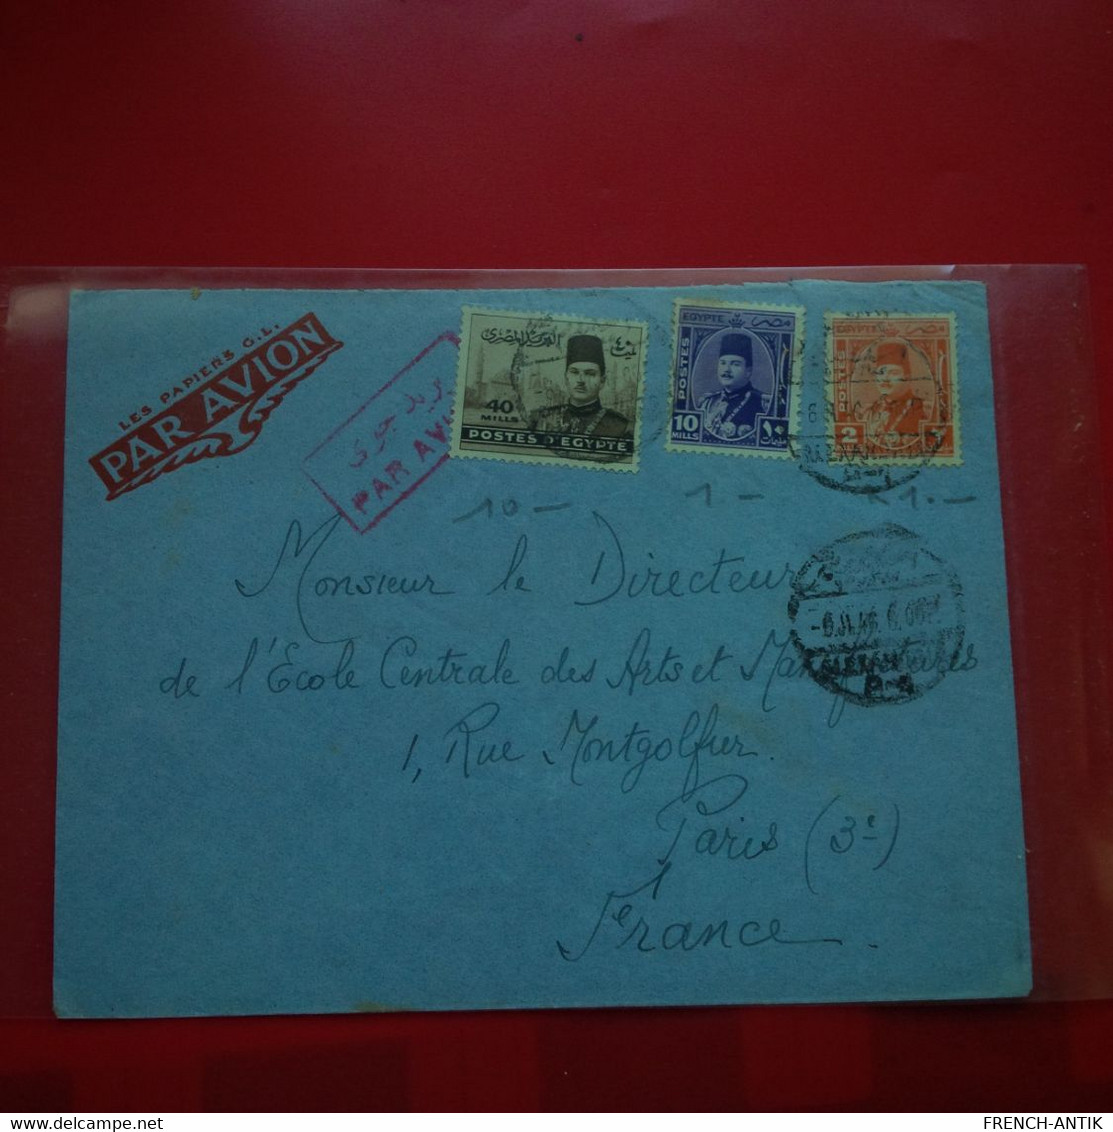 LETTRE EGYPTE ALEXANDRIE POUR PARIS 1946 - Briefe U. Dokumente